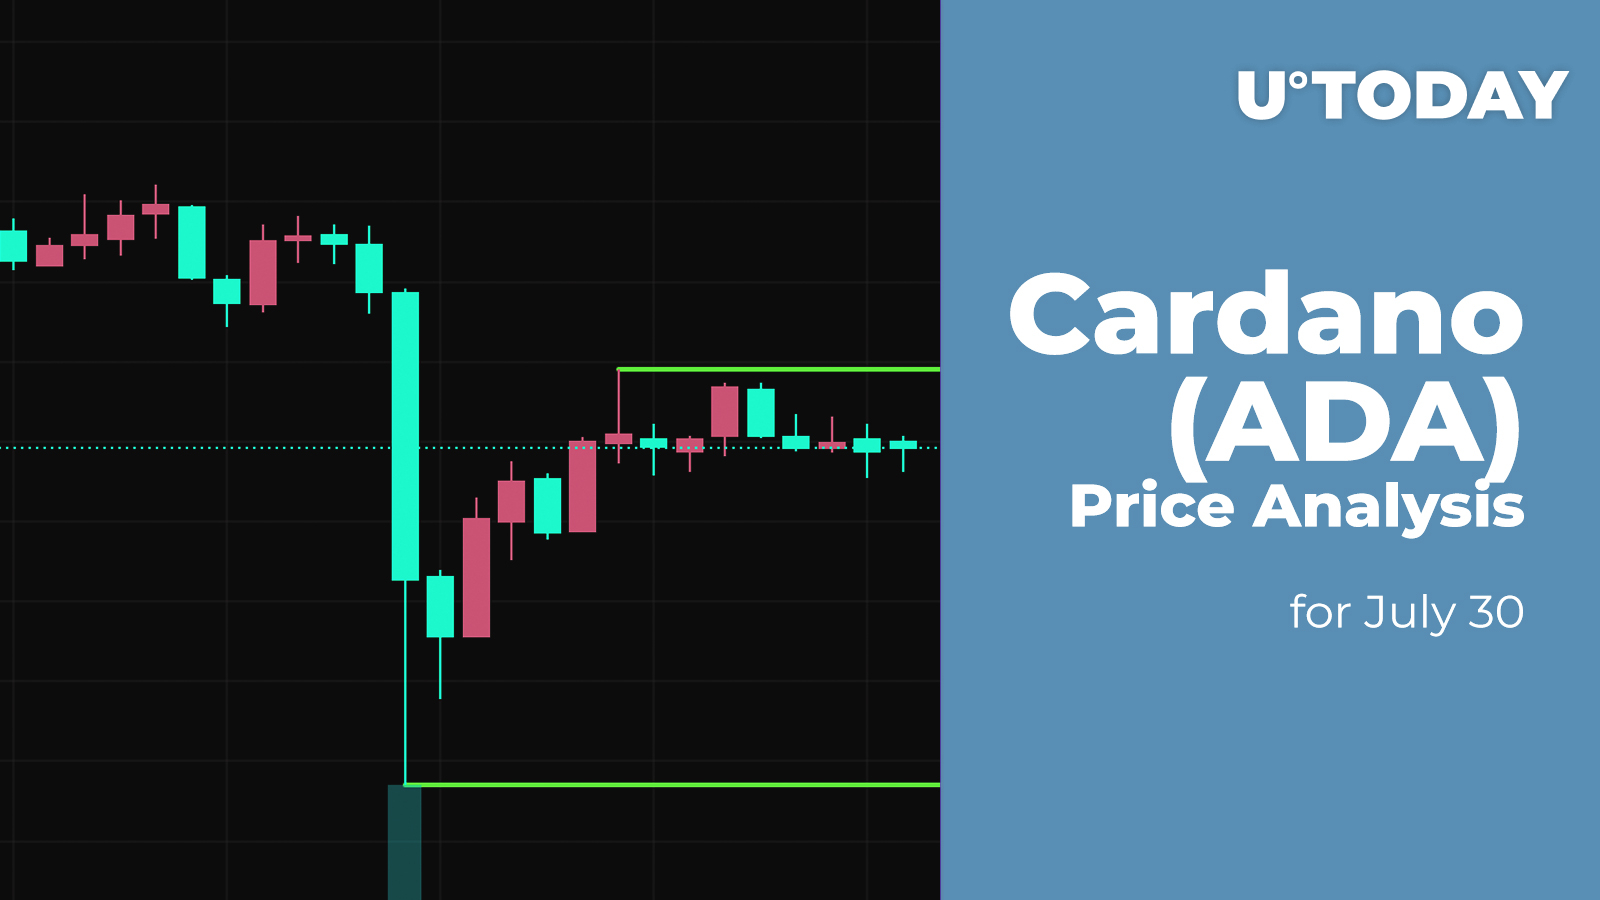 Cardano (ADA) Price Analysis for July 30